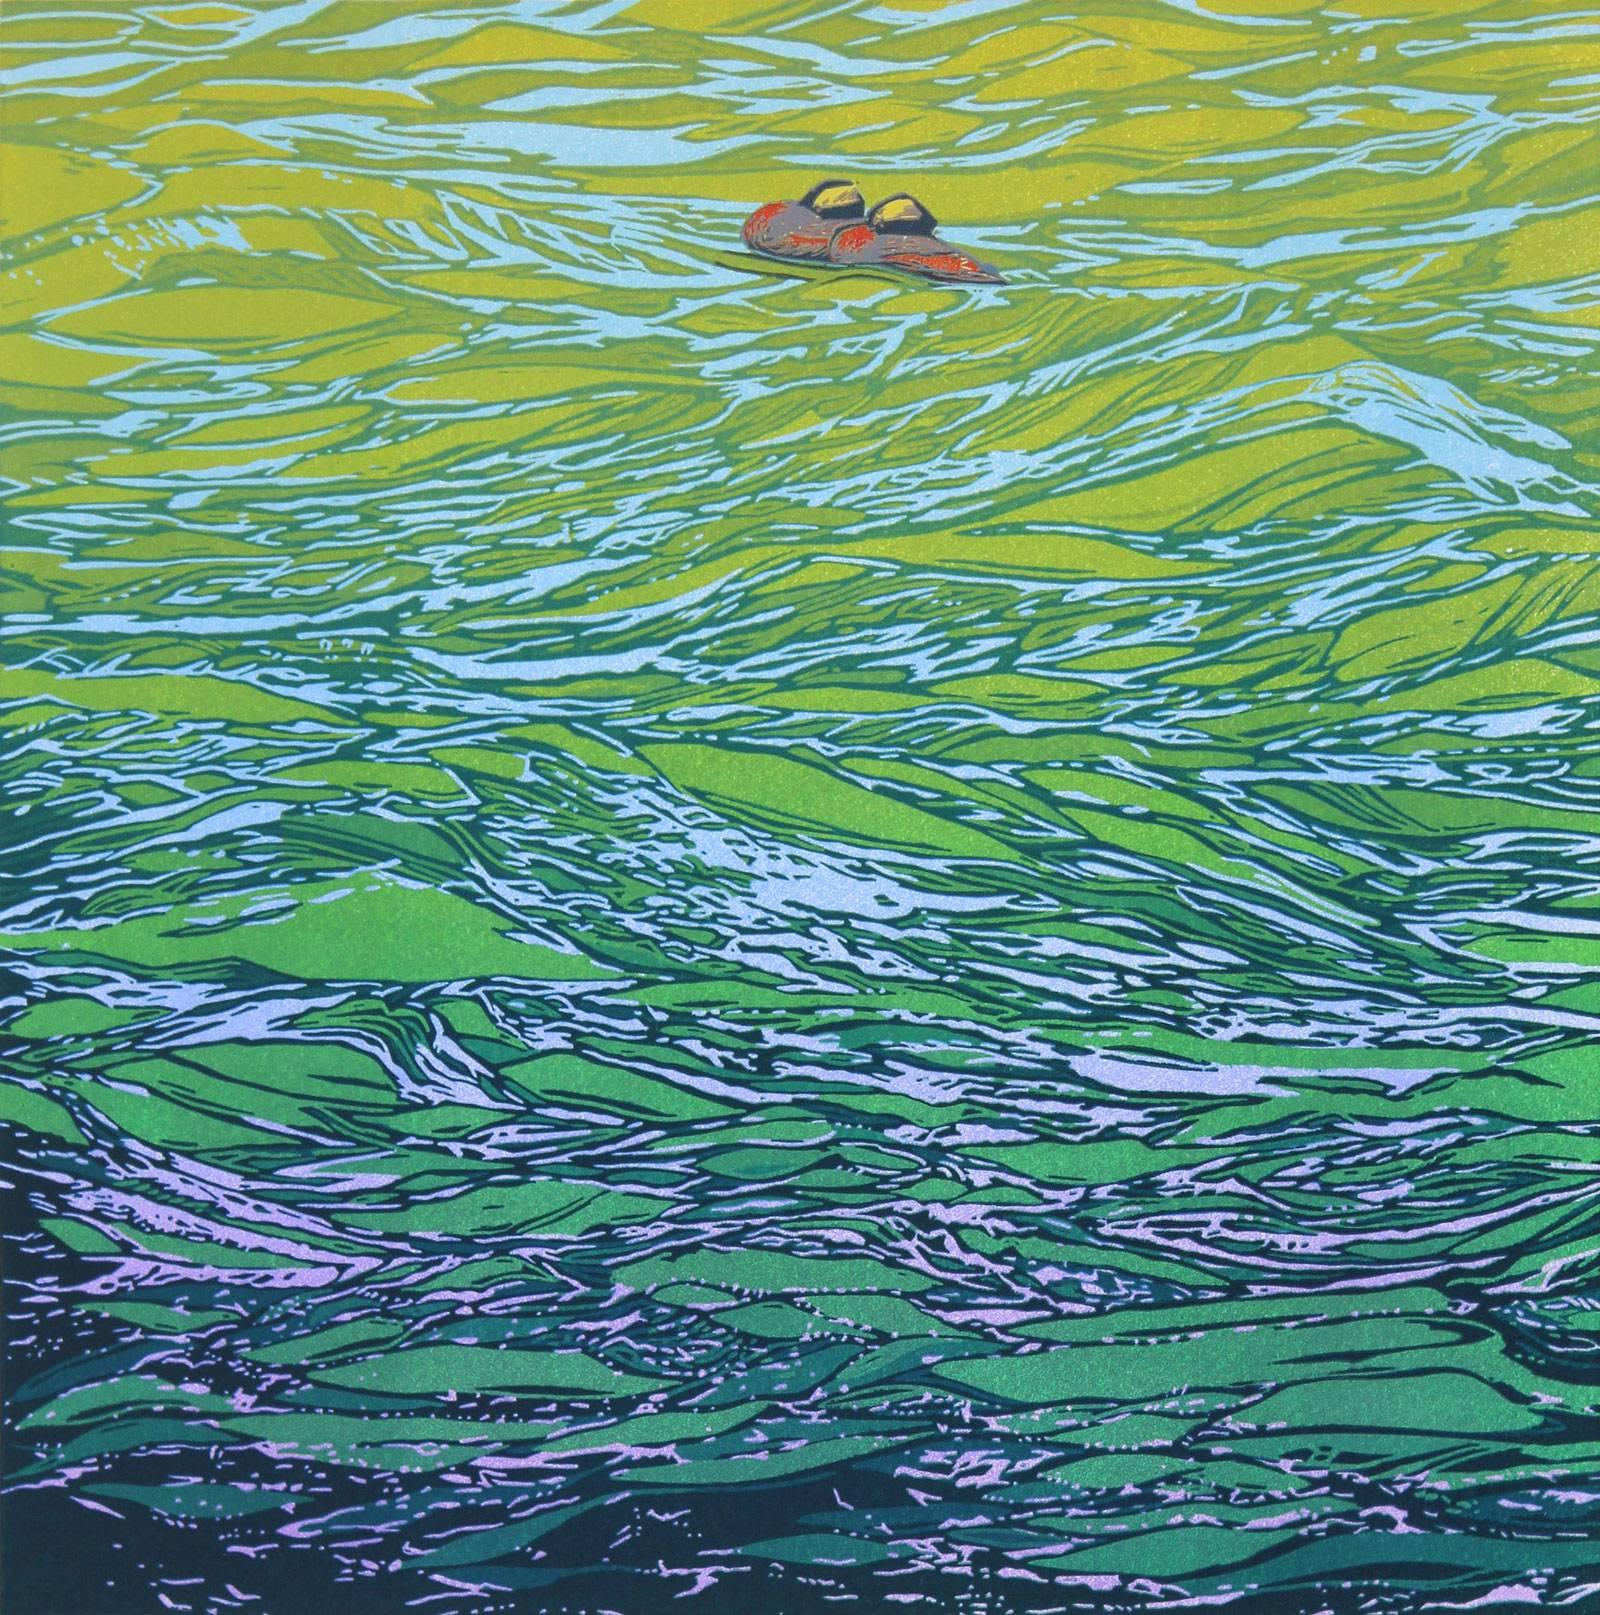 Sherrie York Animal Print - Wild Dreams, EV, 4/20 (water, birds, blue, green)